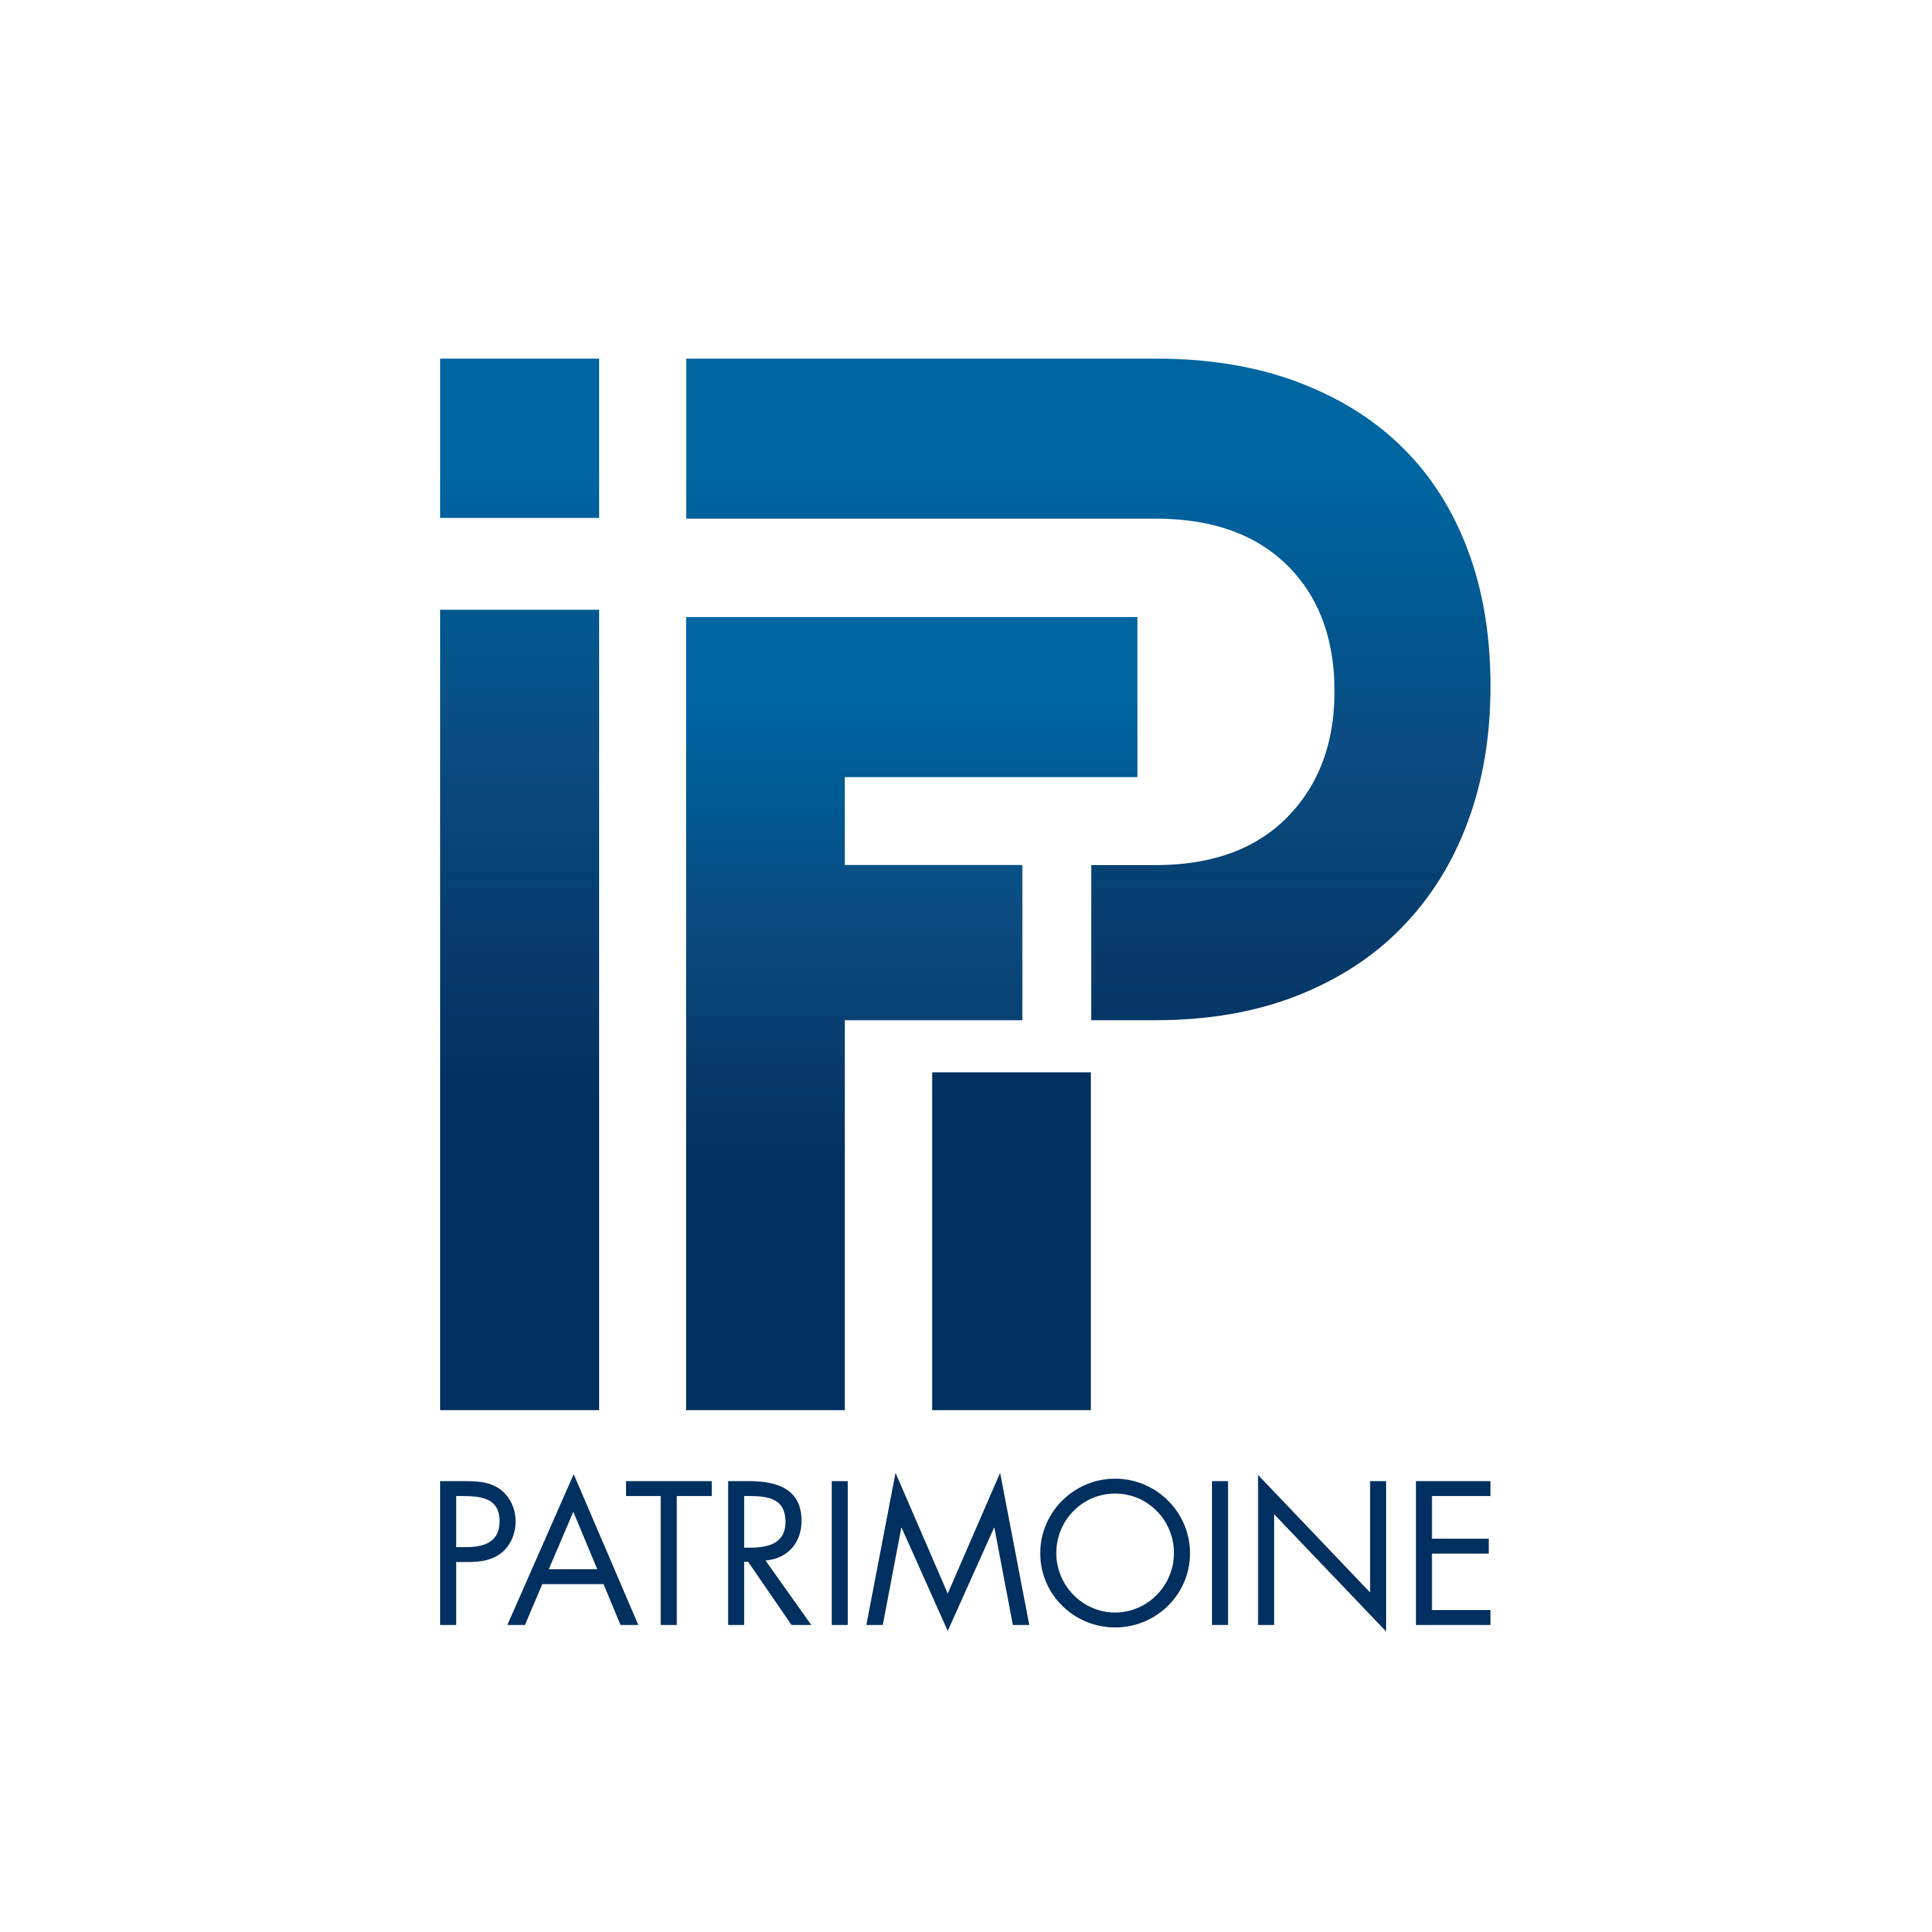 IFP Patrimoine